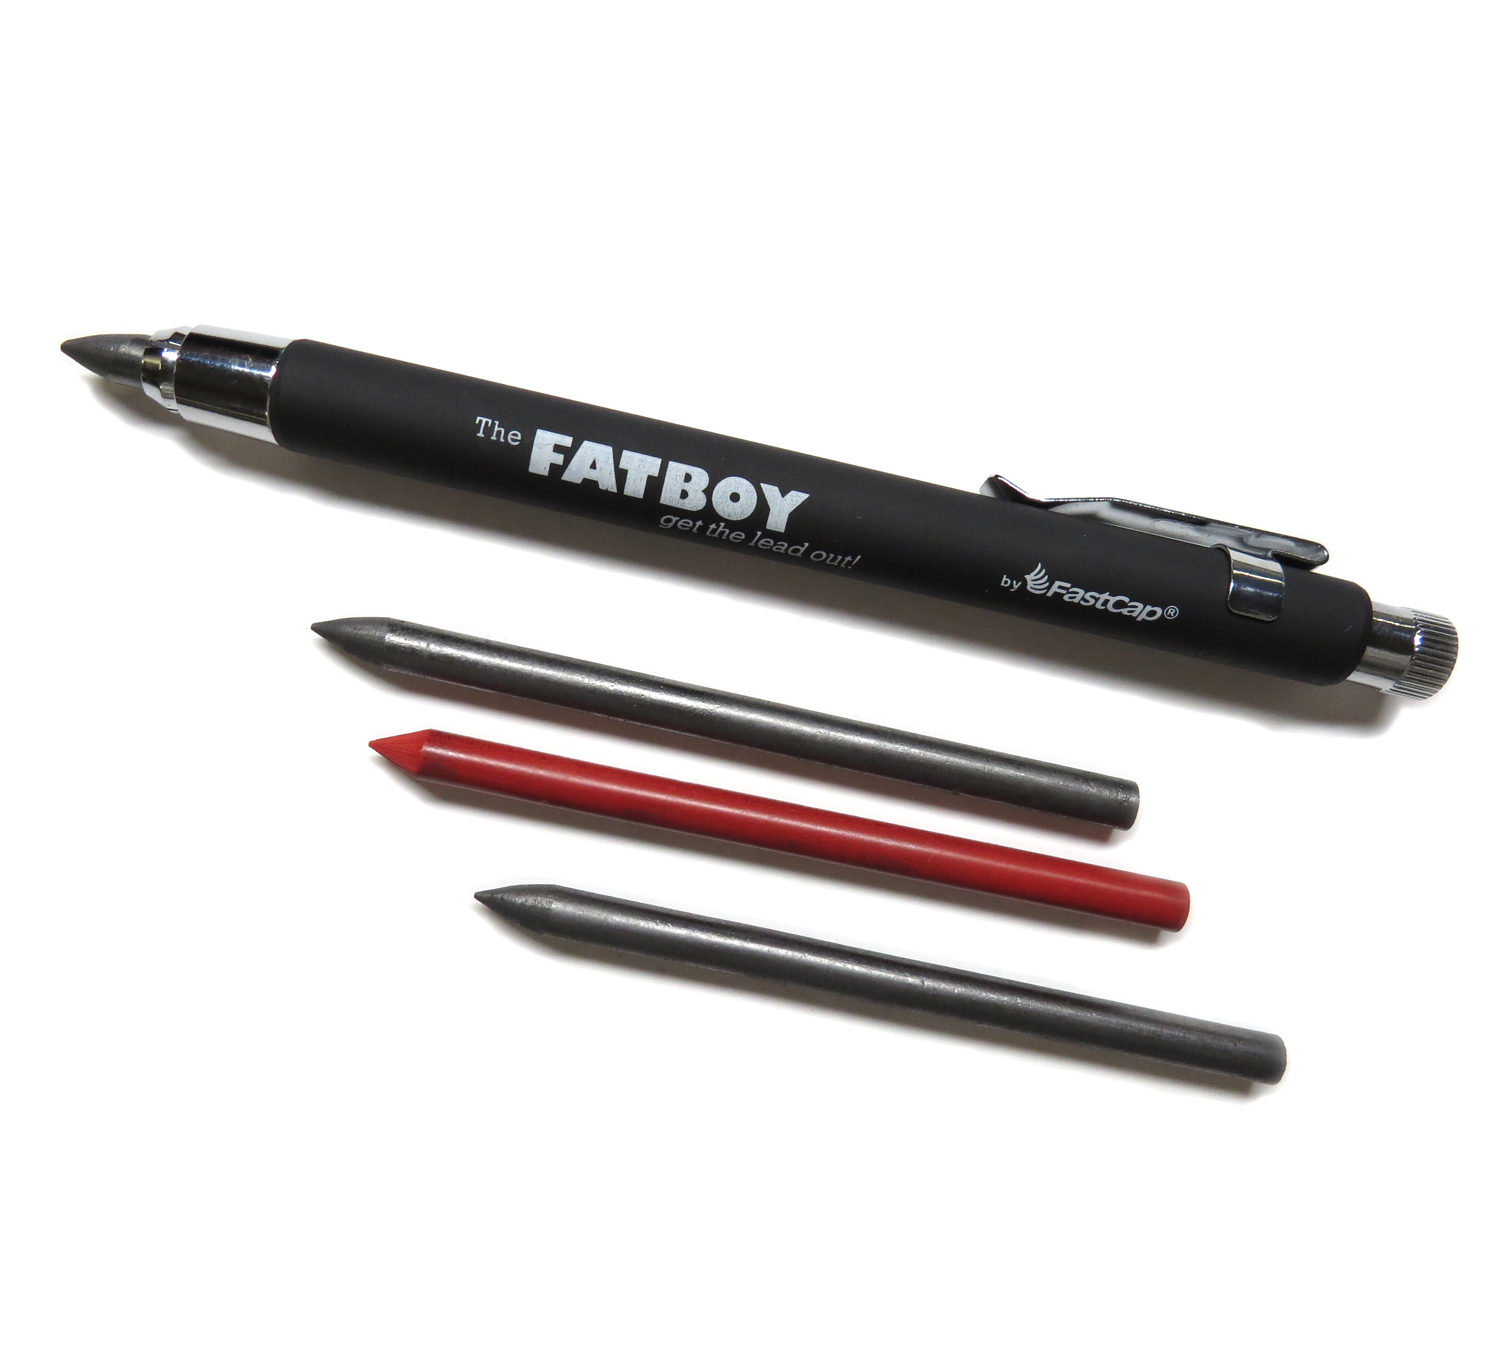 FatBoy Pencil and Refills